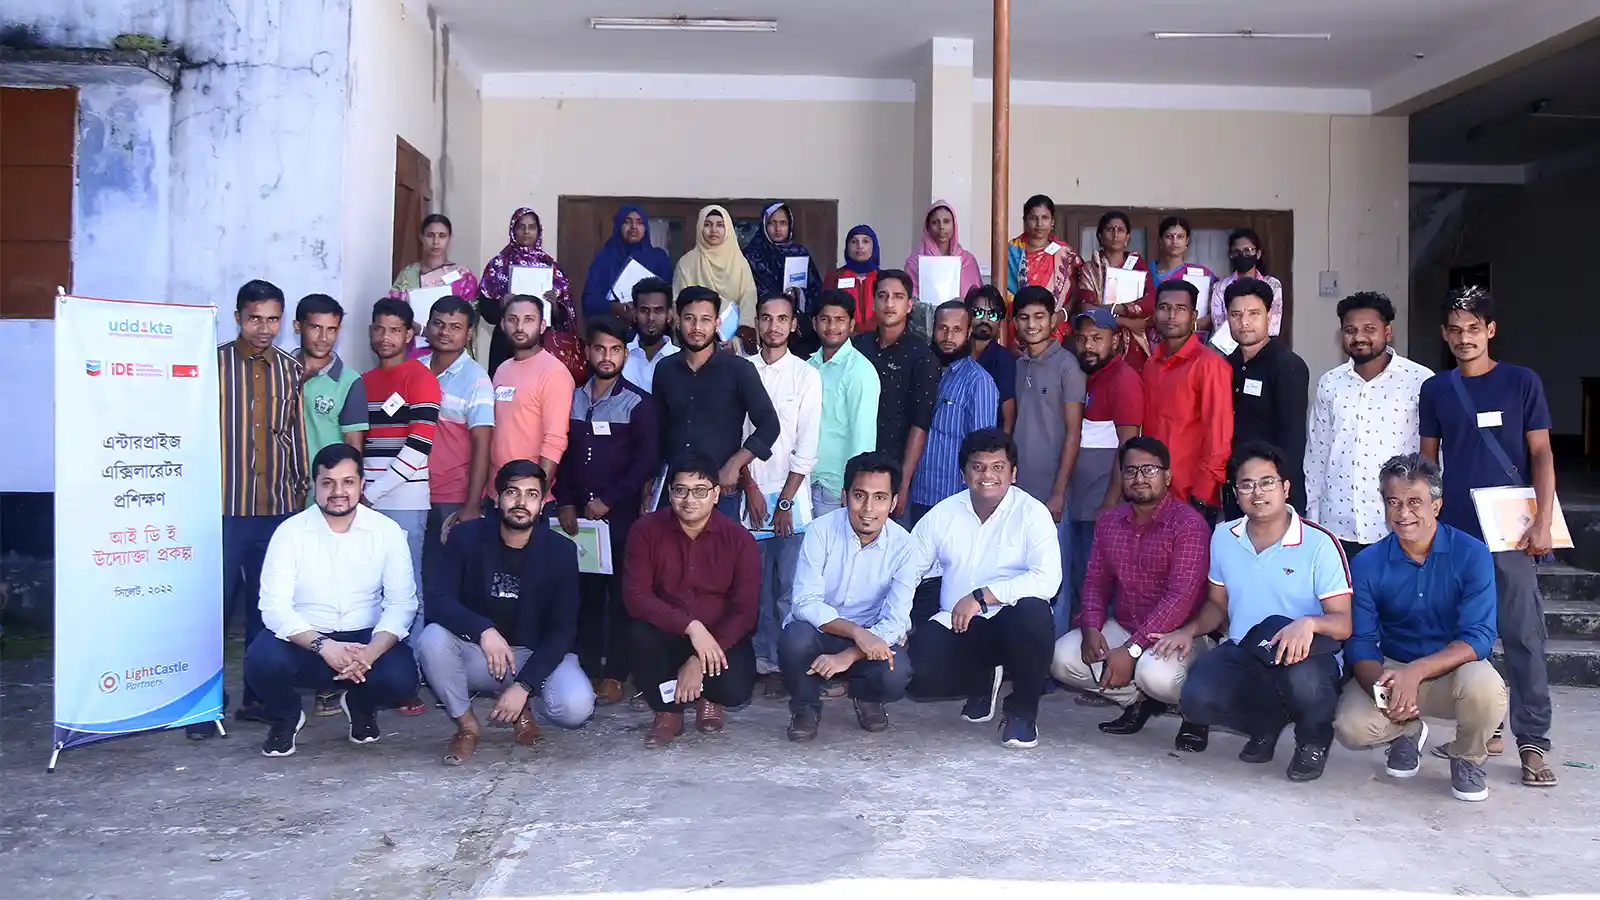 LightCastle Conducts SME Accelerator Training for the Enterprise Development Program of the iDE Uddokta Project in Sylhet